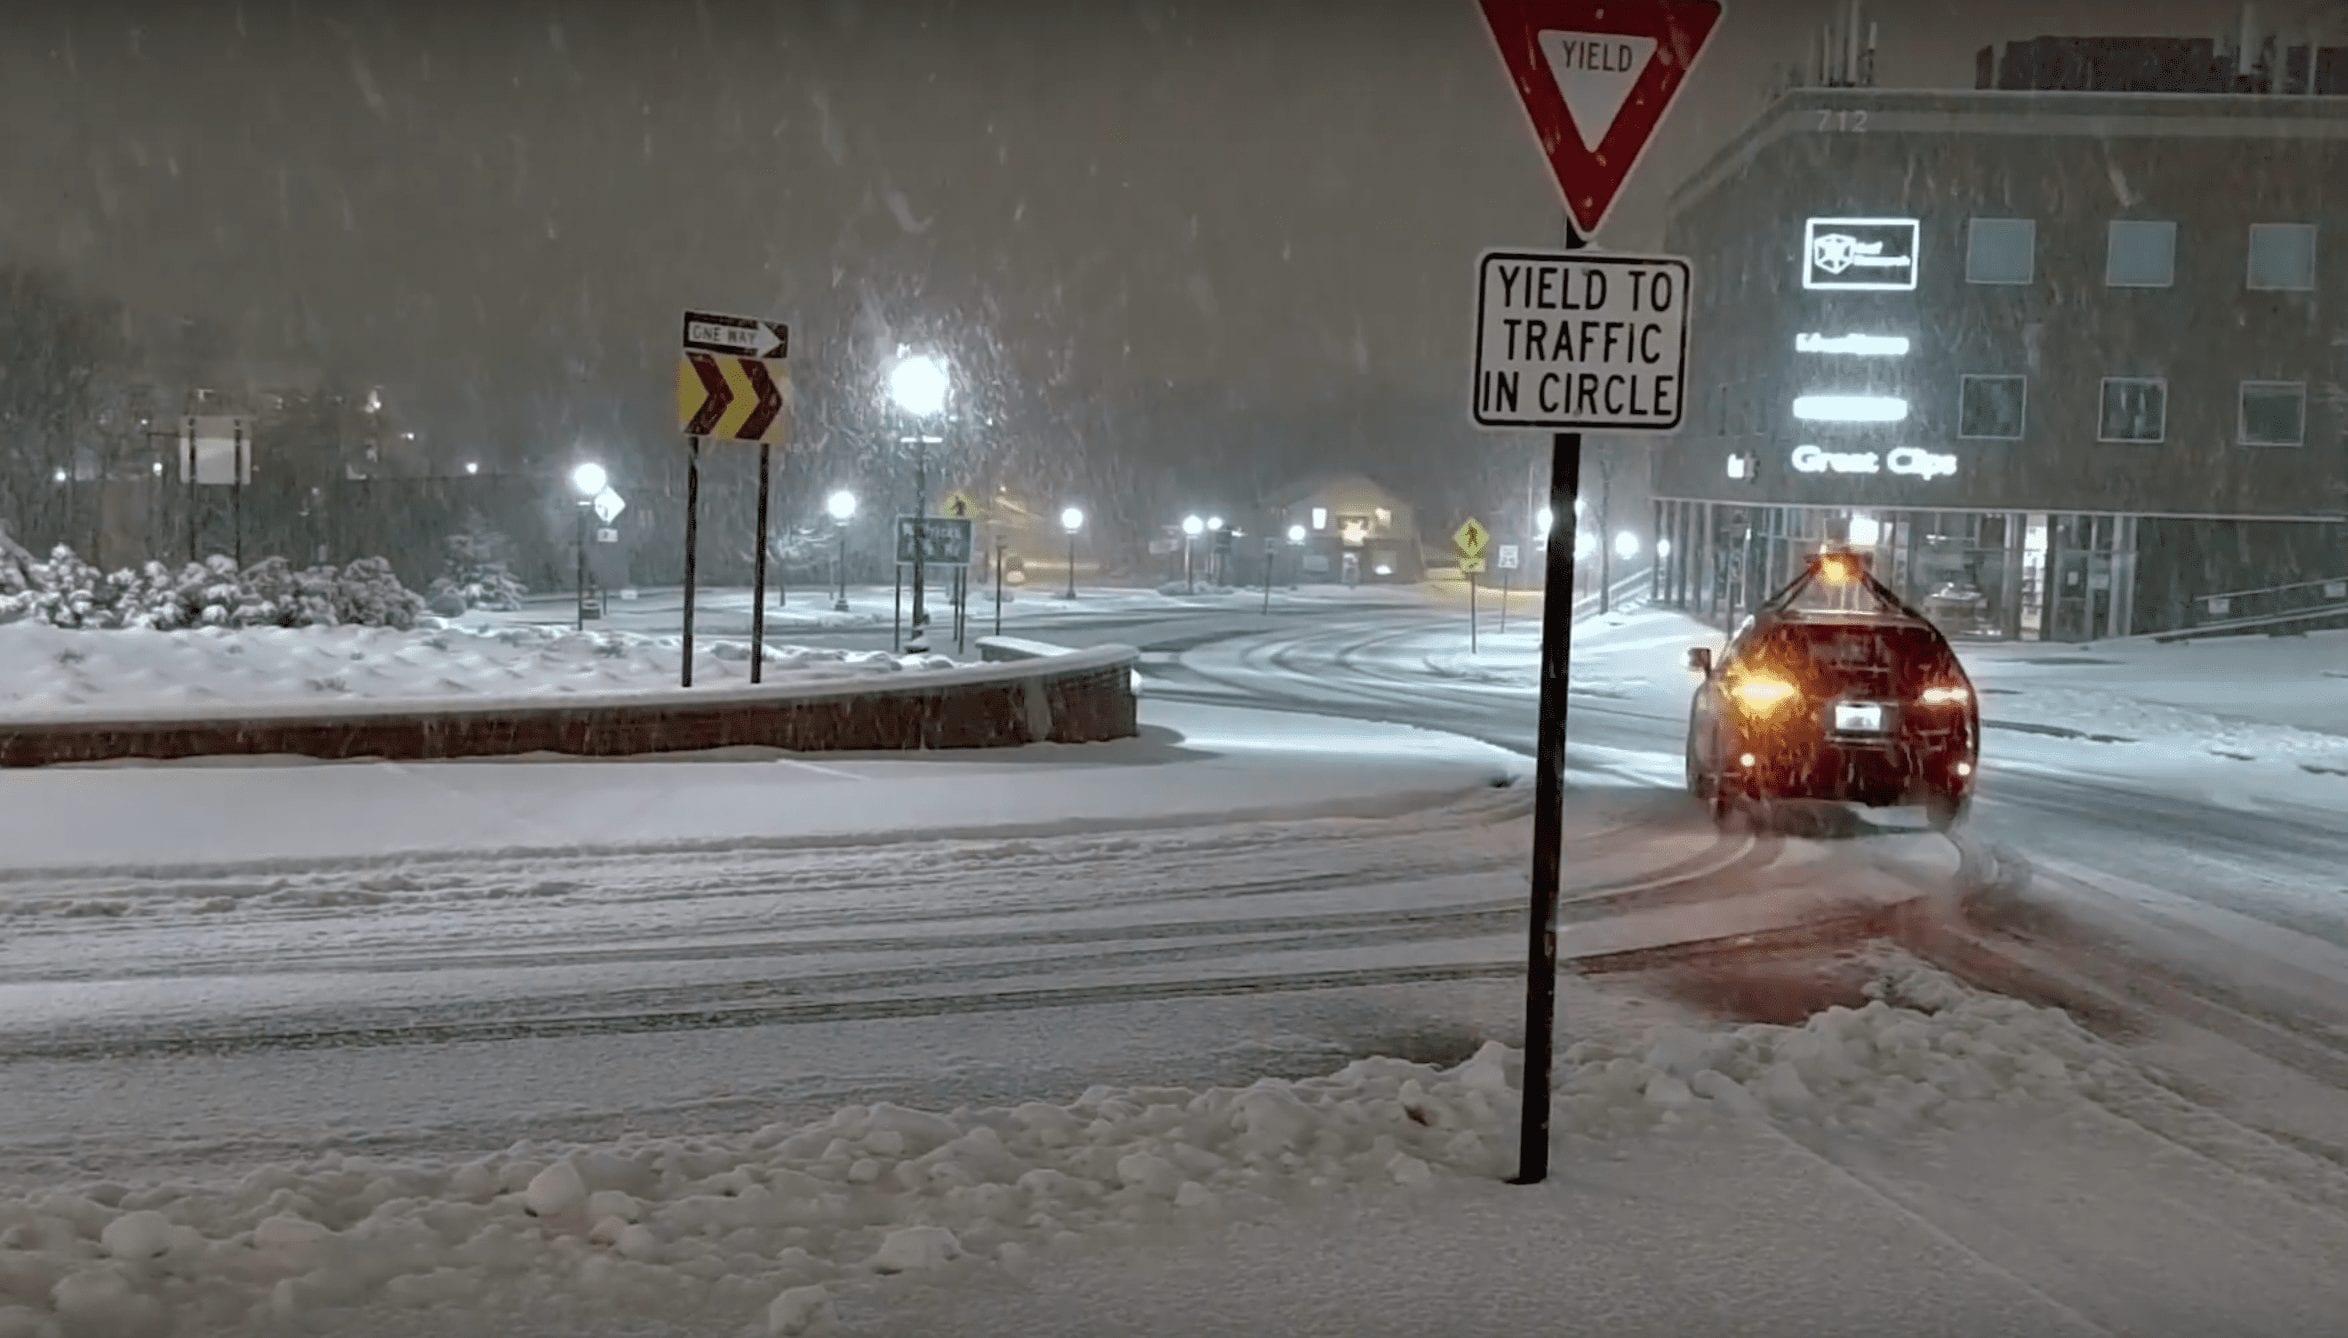 Asimov, Torc's self-driving vehicle, navigates a traffic circle in heavy snow.